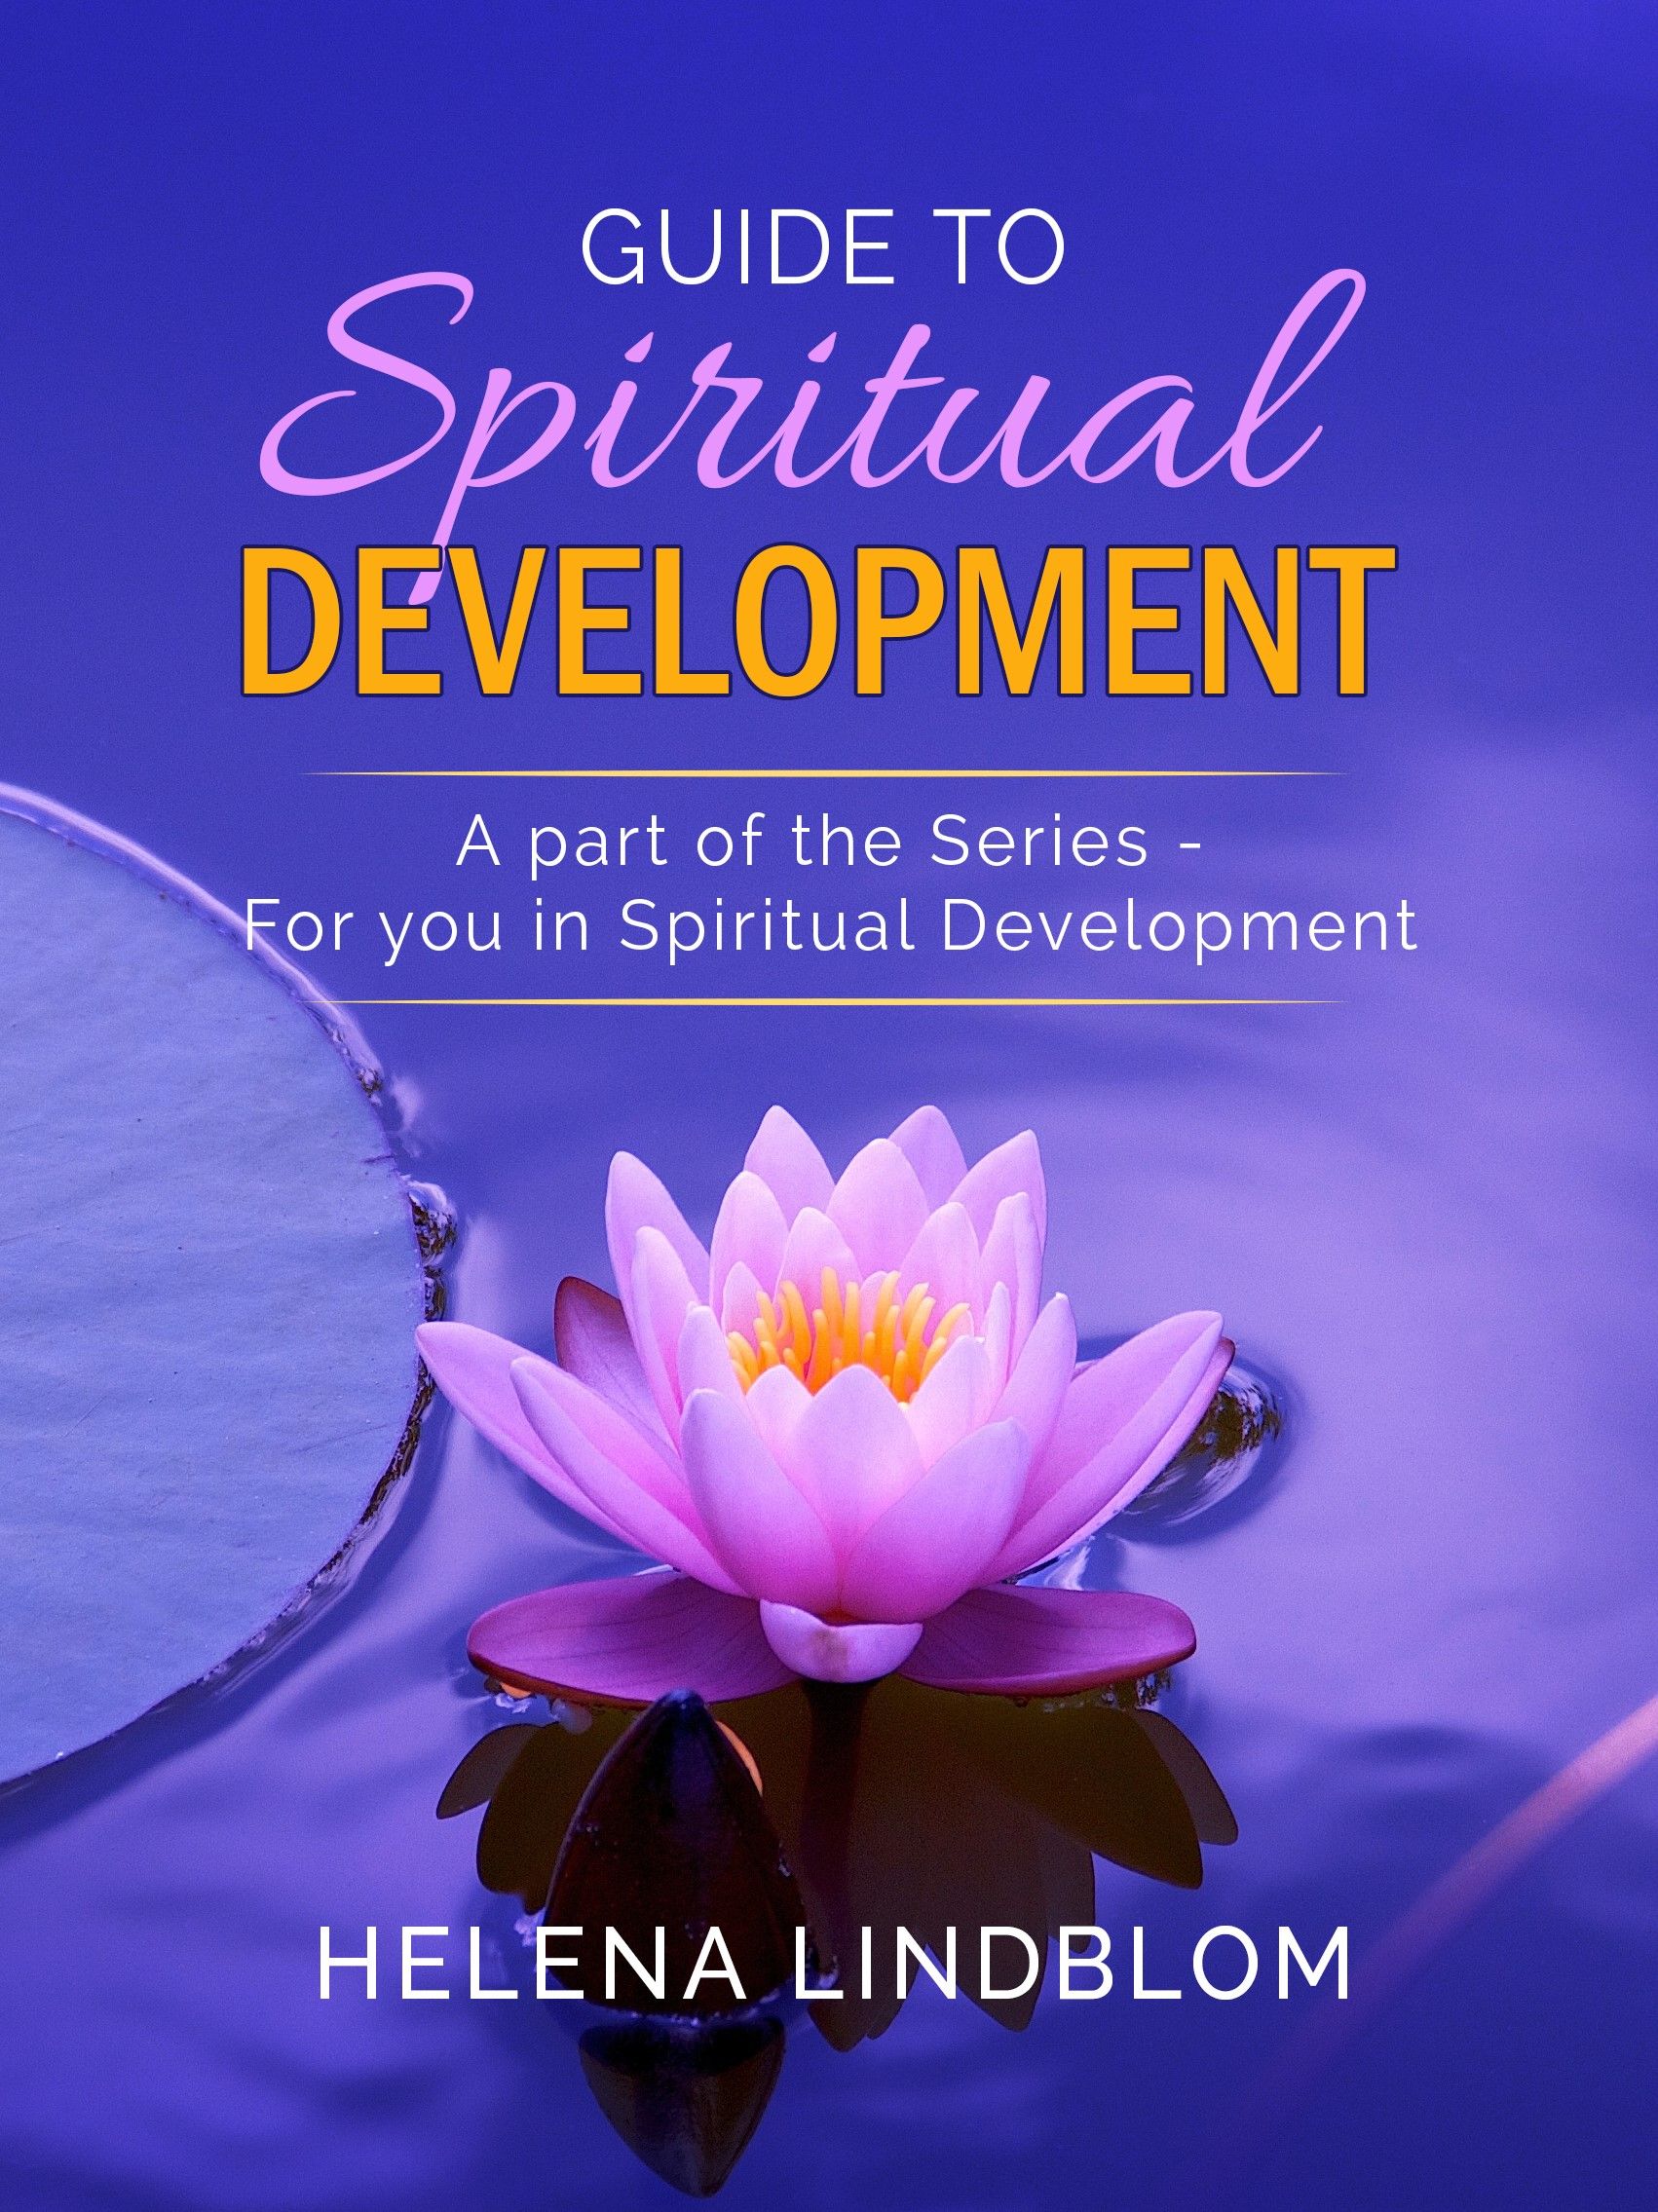 Guide to Spiritual Development, ljudbok av Helena Lindblom